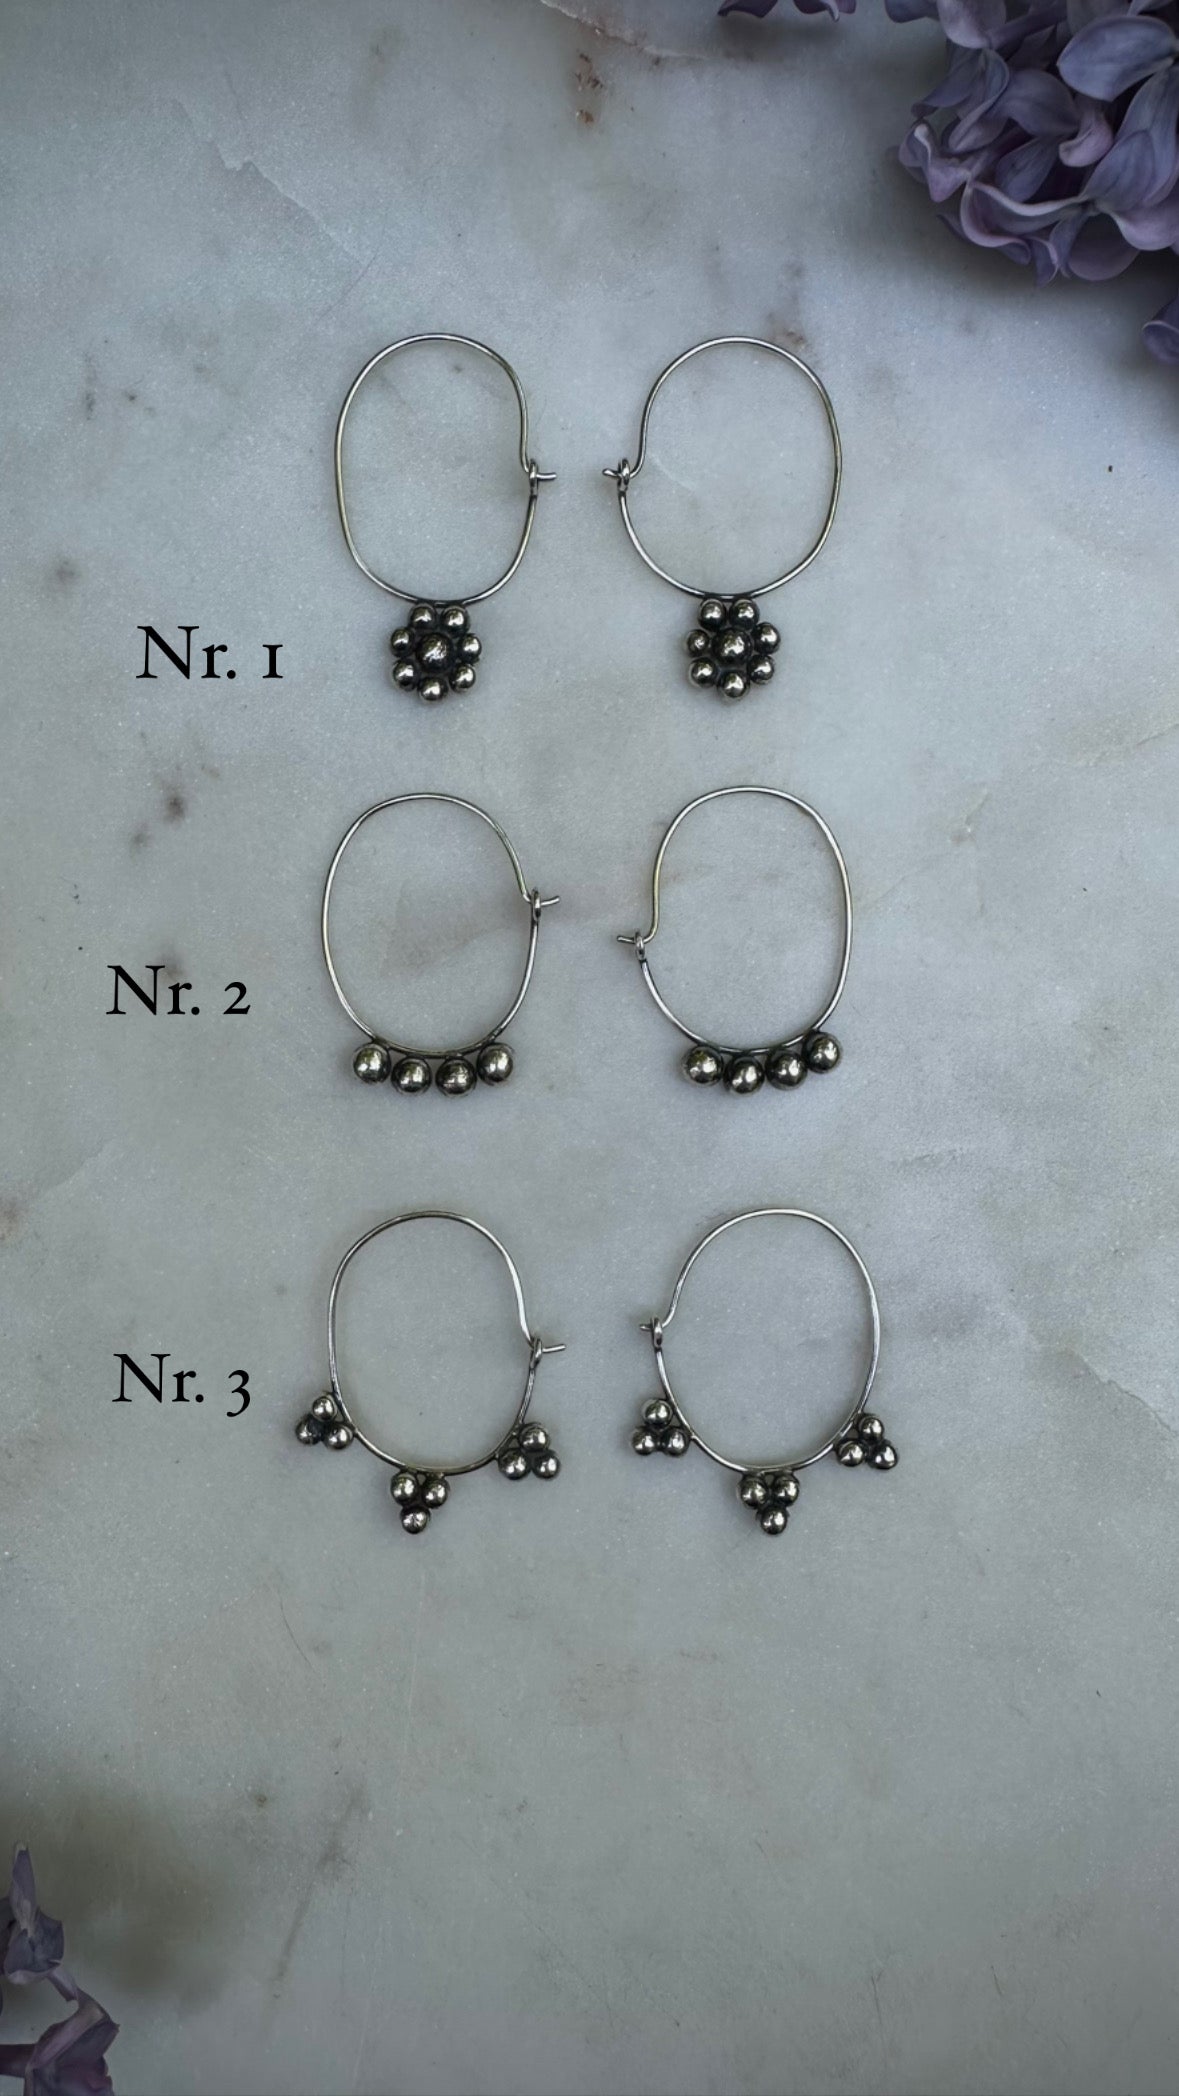 Handmade earrings in sterling silver